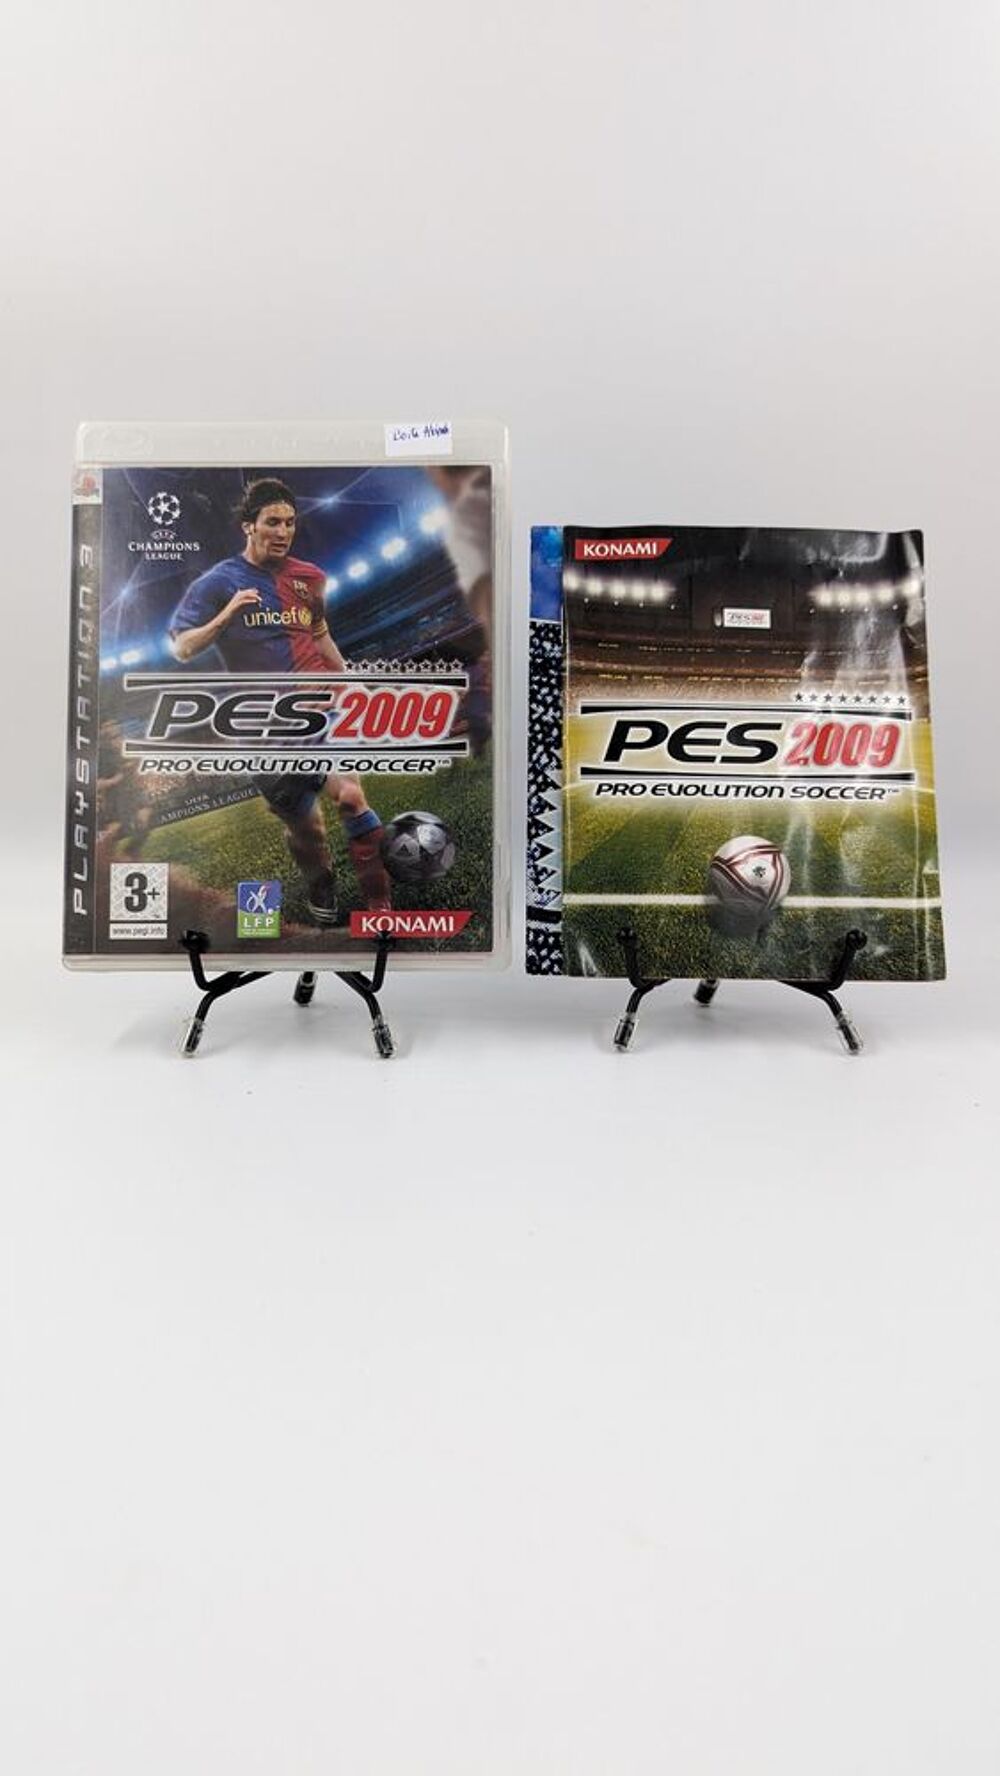 Jeu PS3 Playstation 3 Pro Evolution Soccer 2009 complet Consoles et jeux vidos